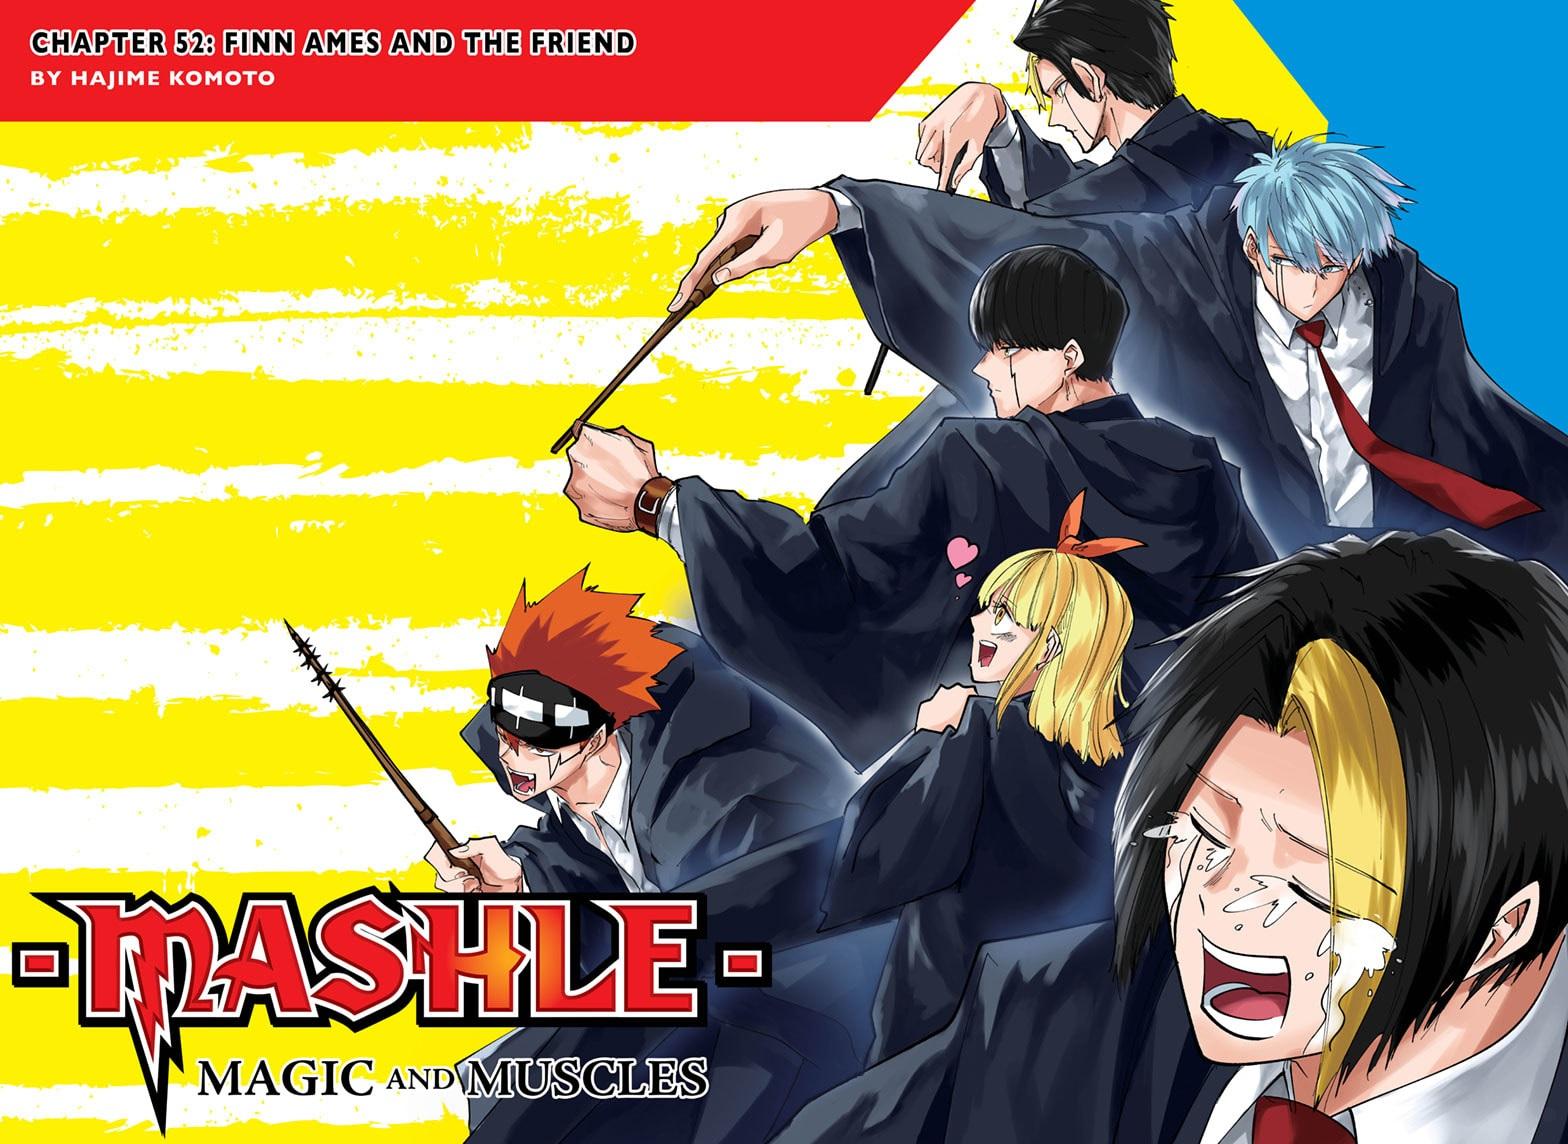 Mashle Anime Mash 4K Wallpaper iPhone HD Phone #3451k